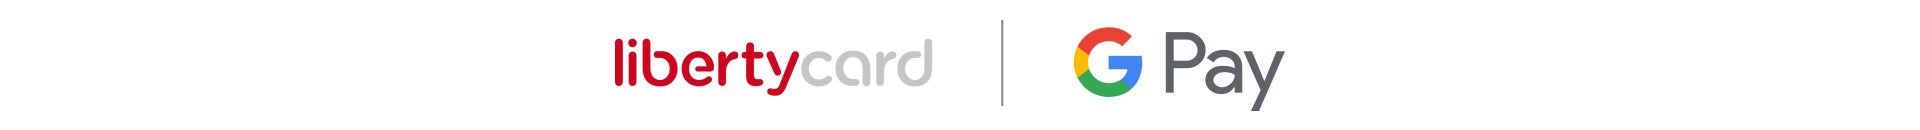 Google Pay Logo mobile